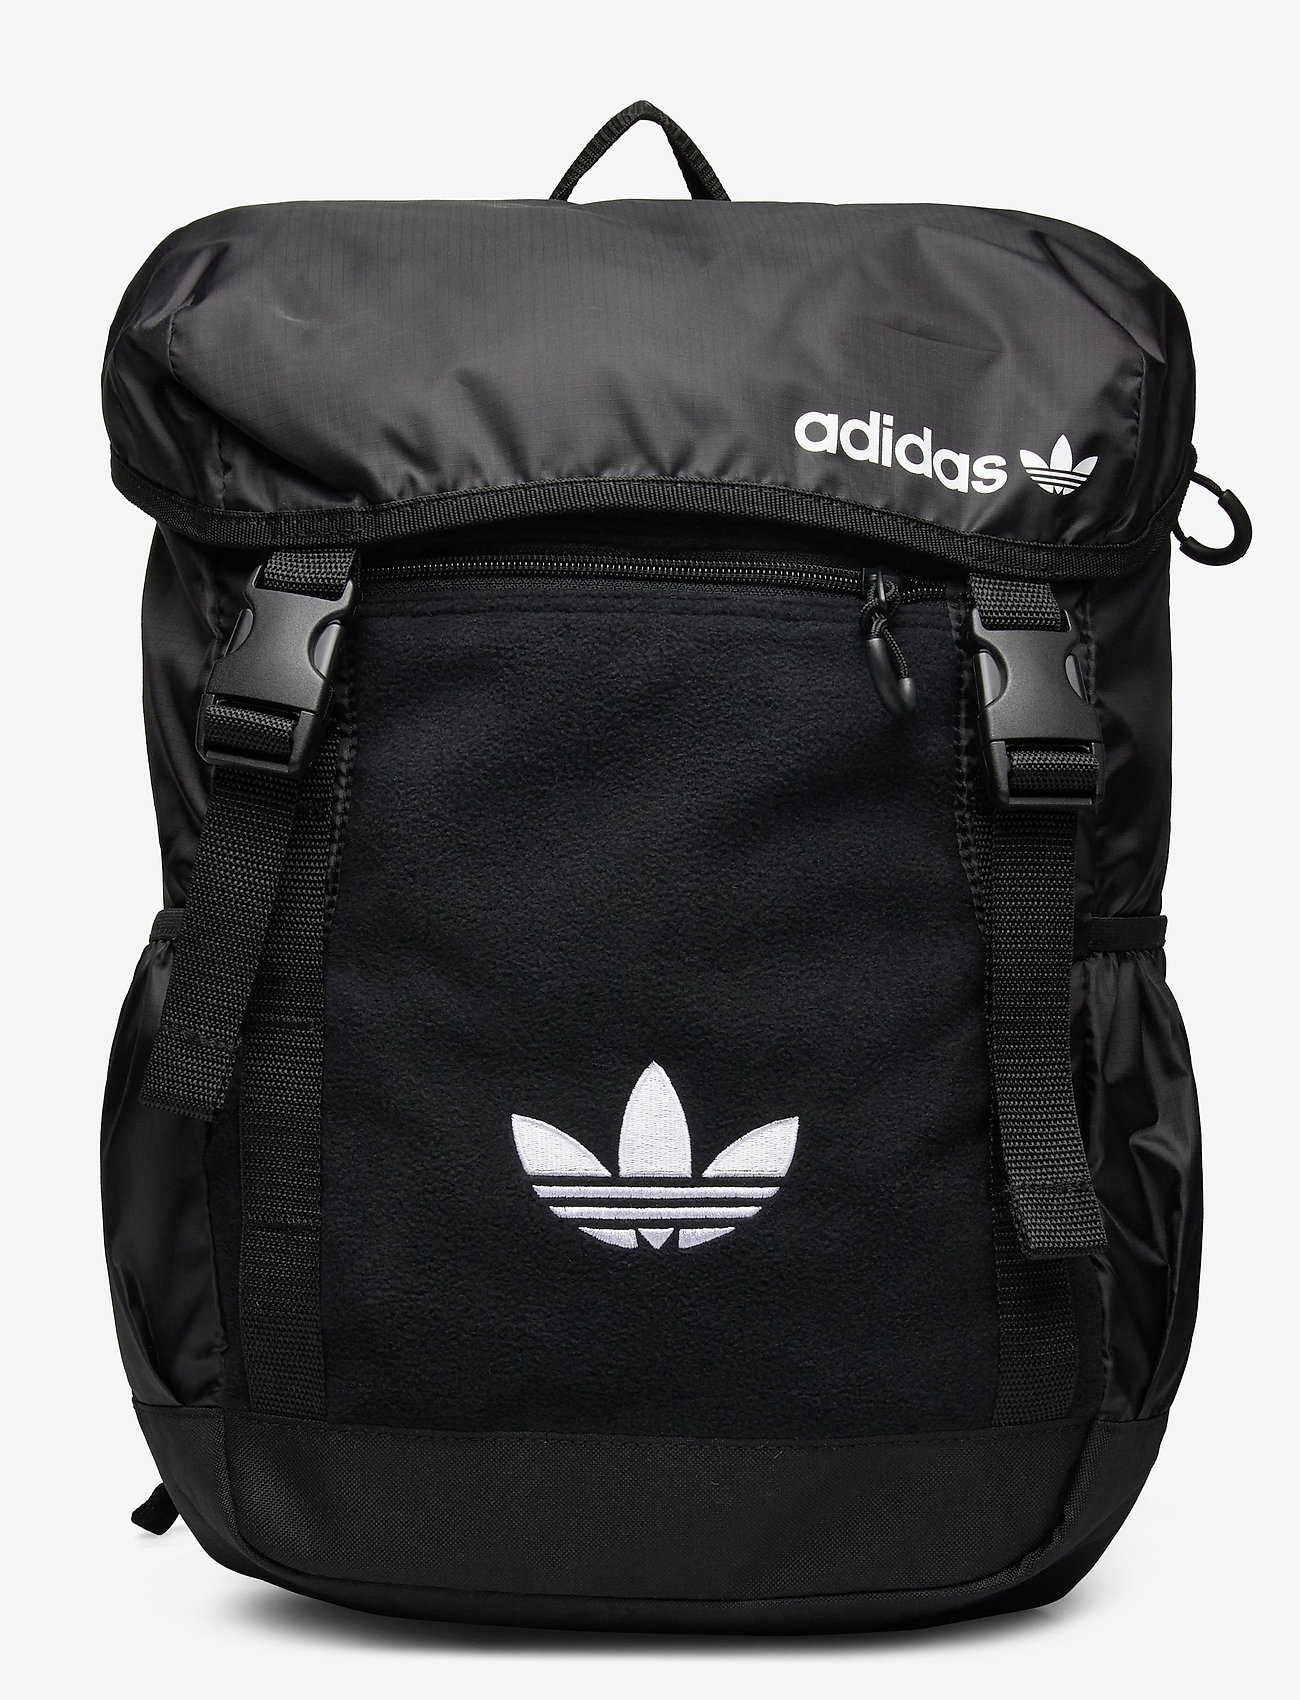 adidas buckle backpack